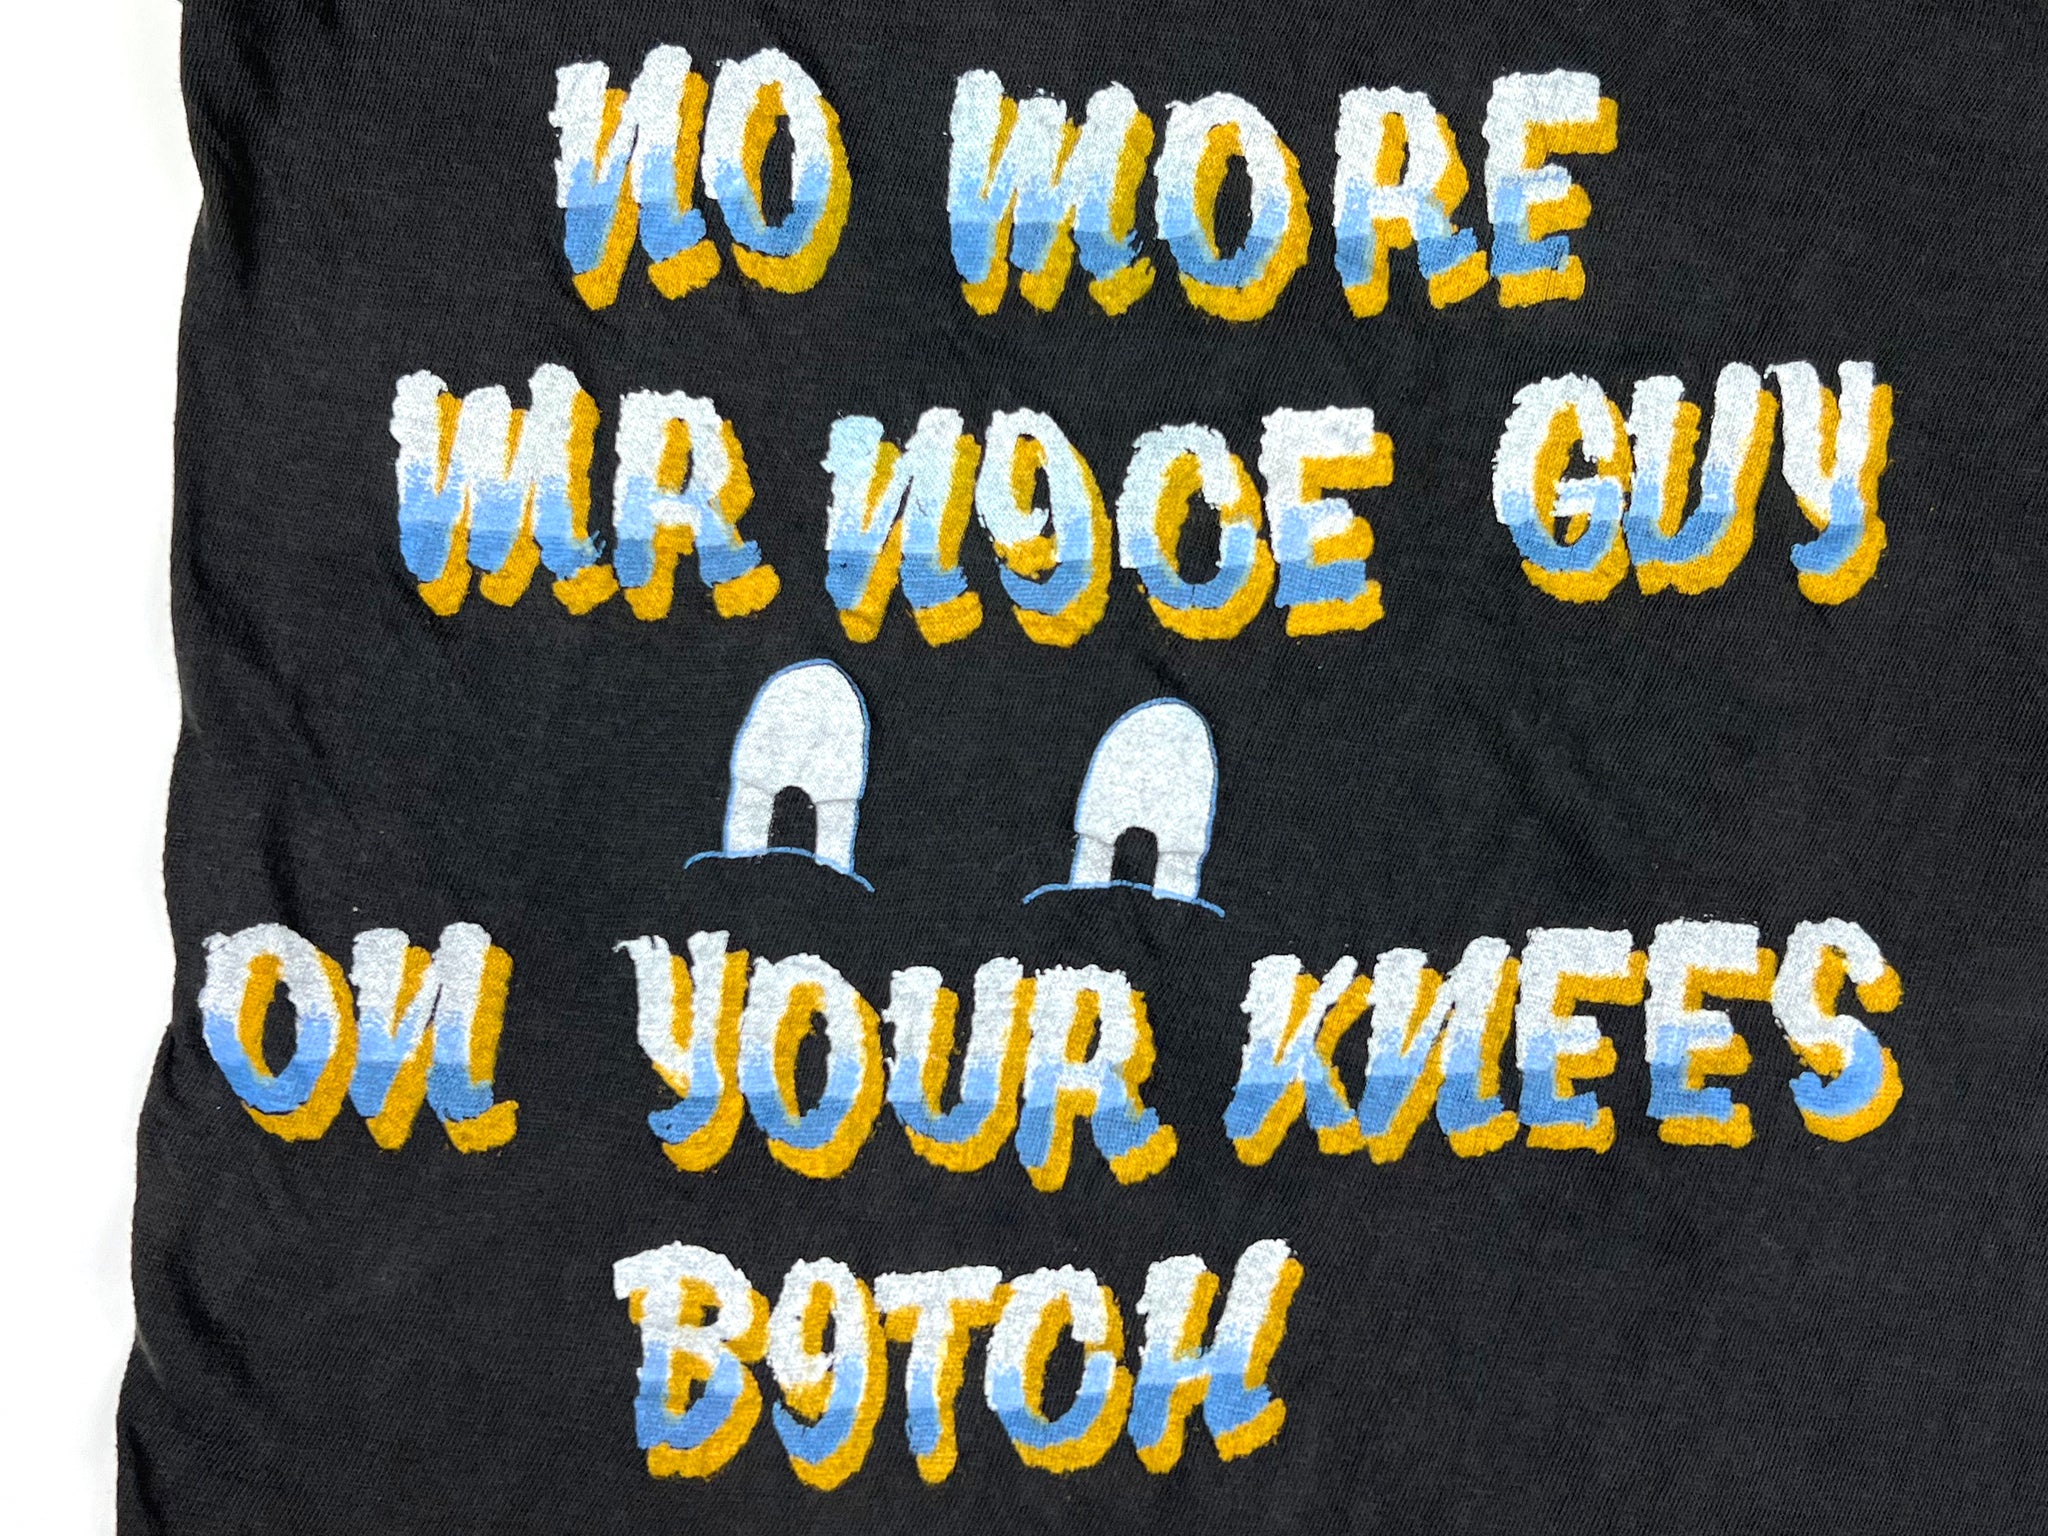 No More Mr Nice Guy T-Shirt